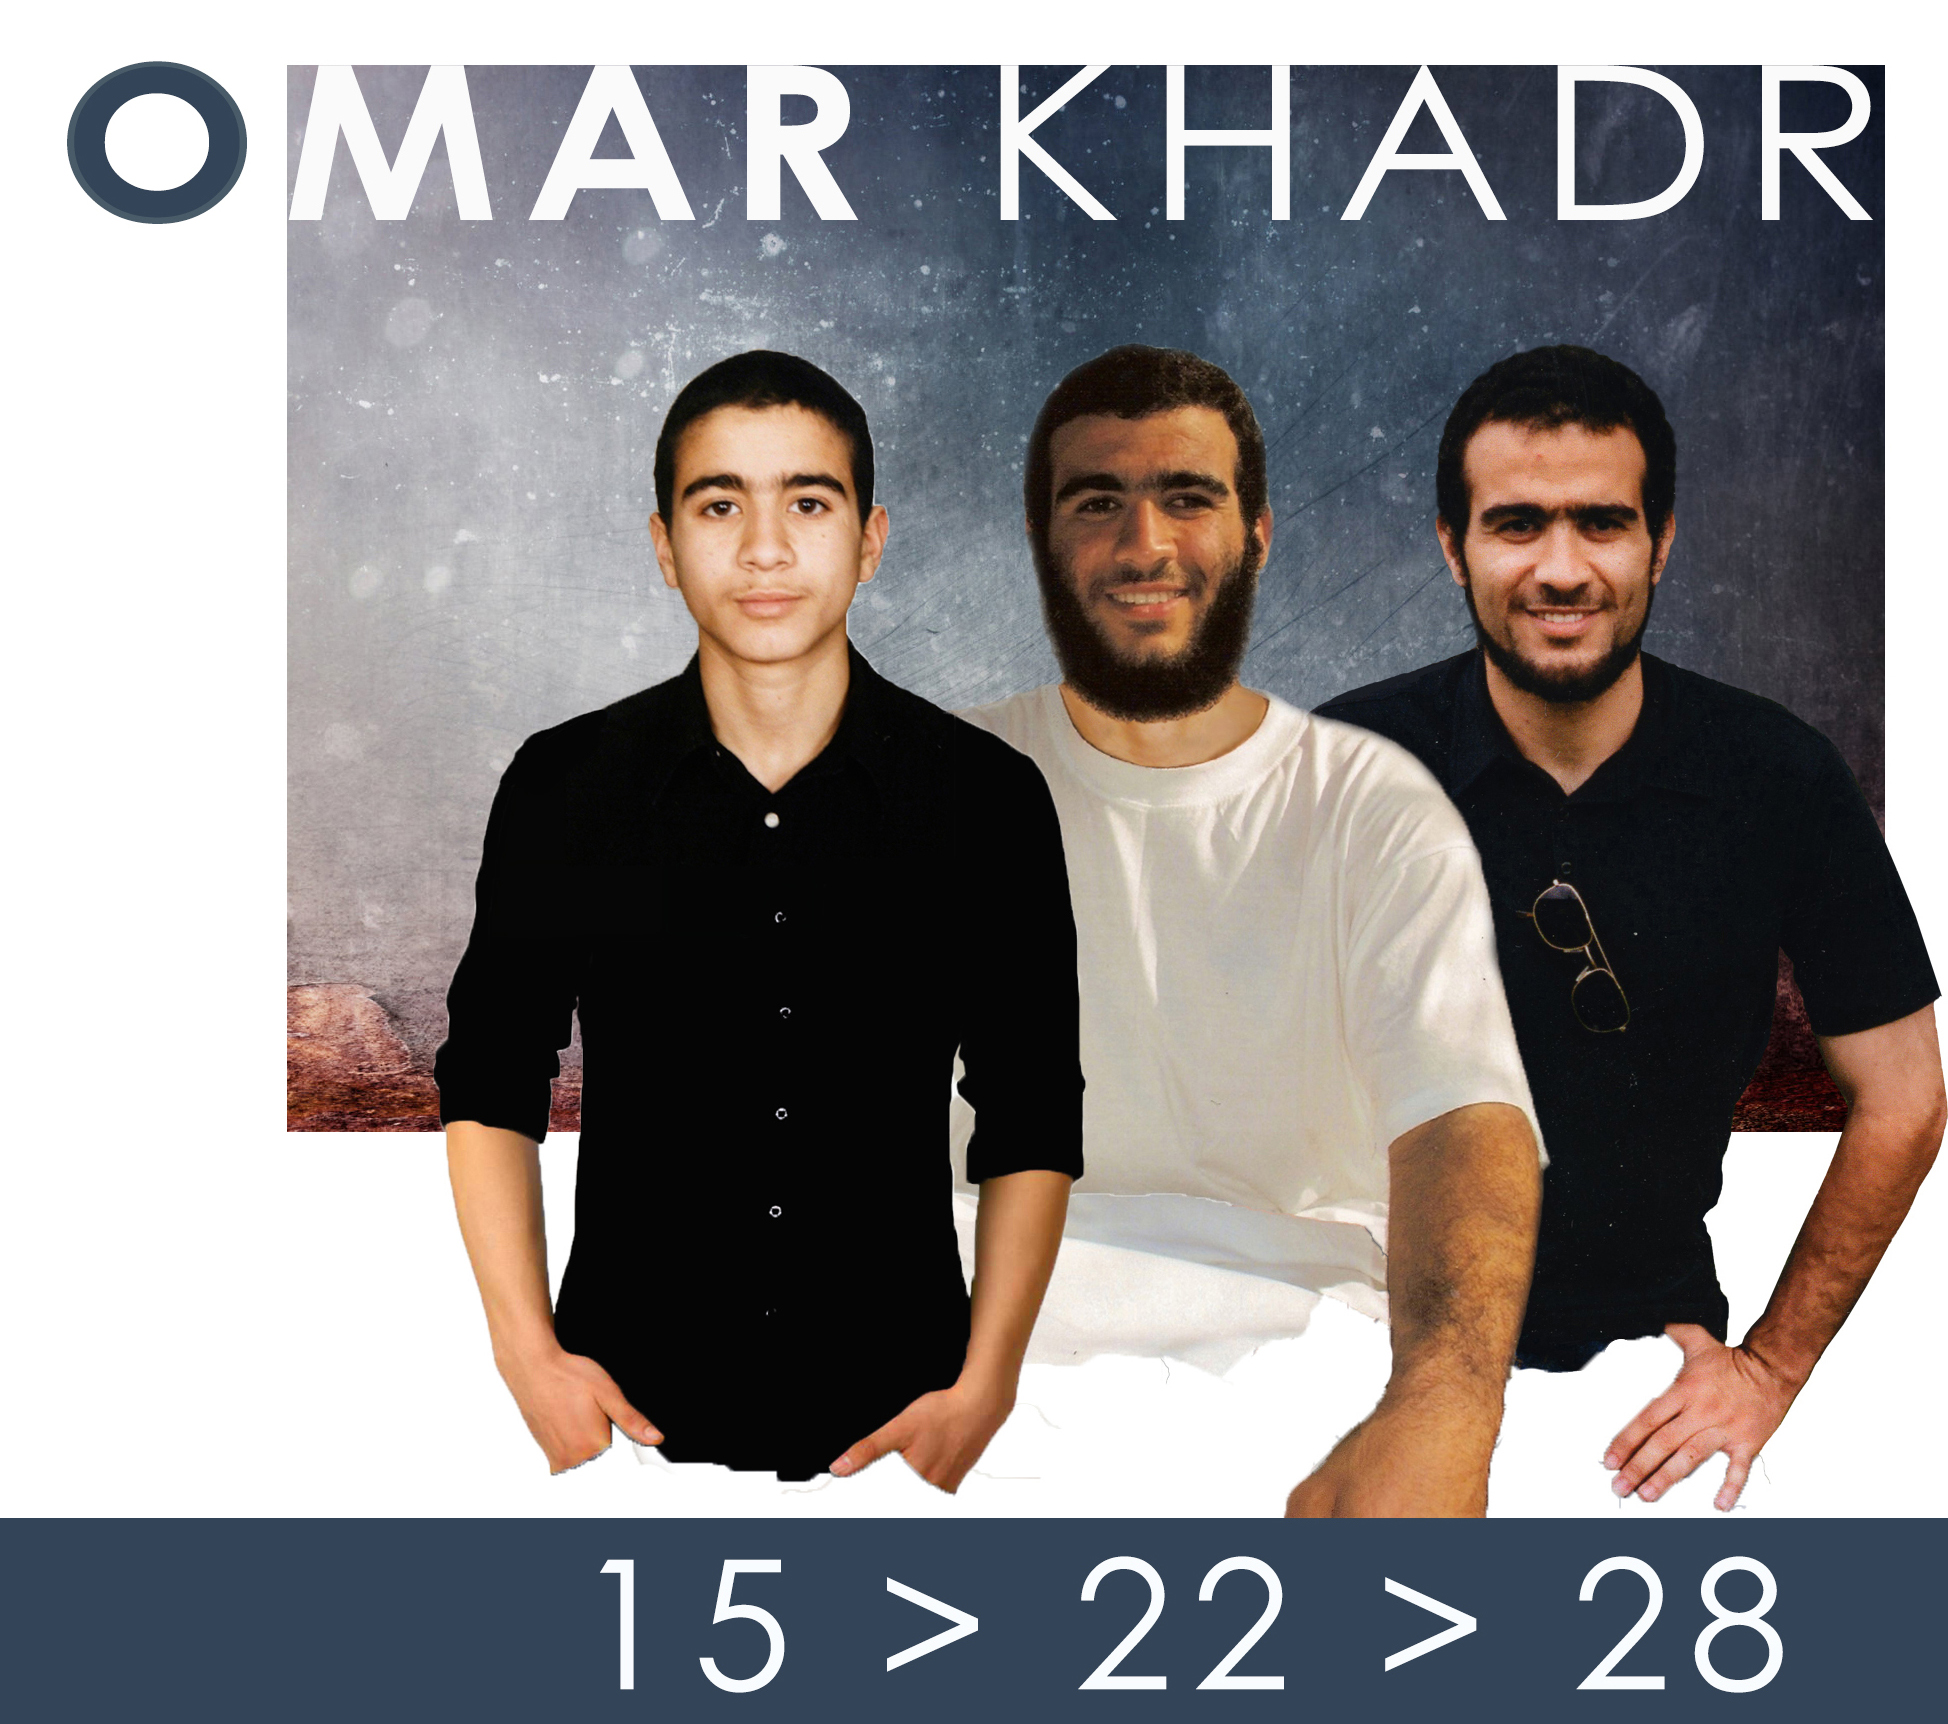 omar_khadr_latest_pic_age_15_22_28